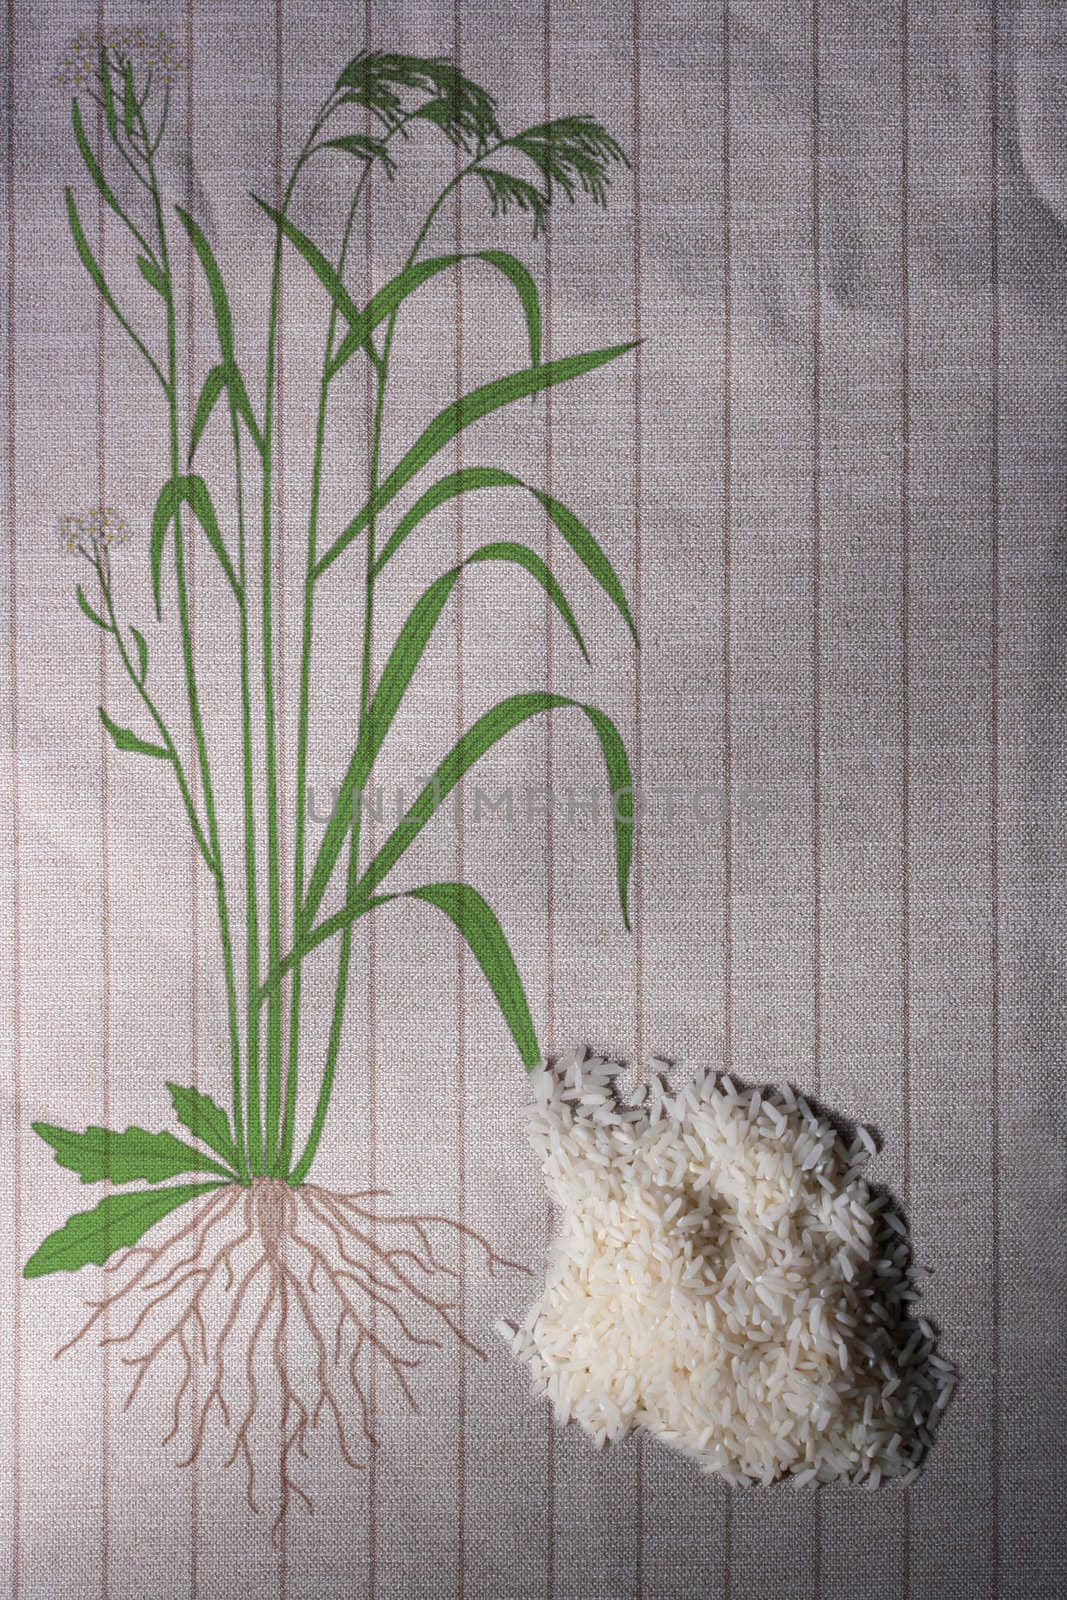 Rice grains by VIPDesignUSA